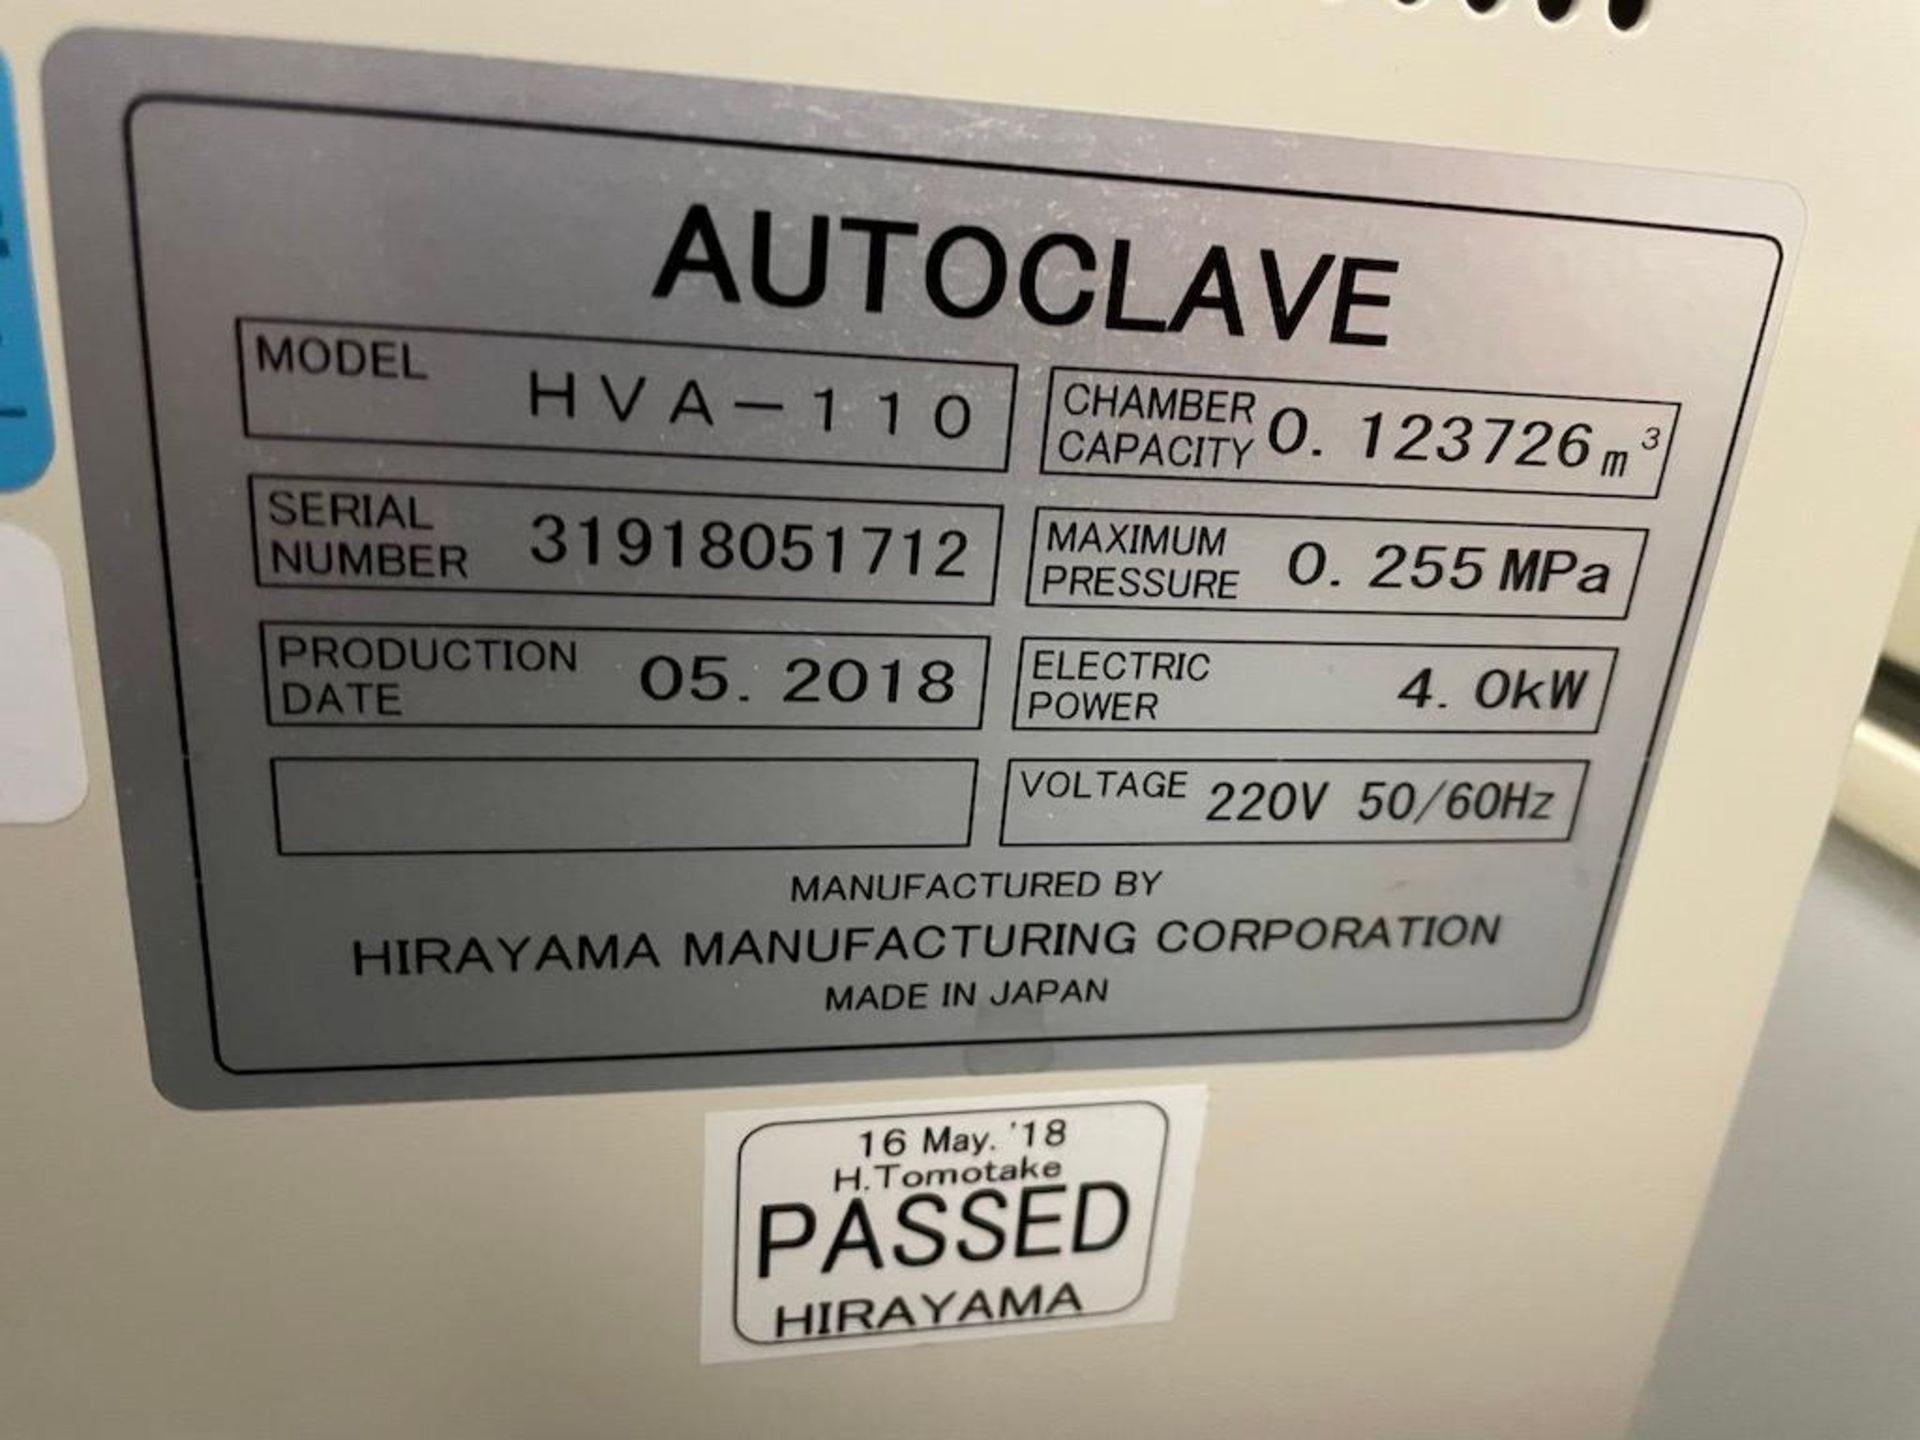 2018 HIRAYAMA AUTOCLAVE MODEL HICLAVE HVA-110, SN 31918051712 - Image 6 of 7